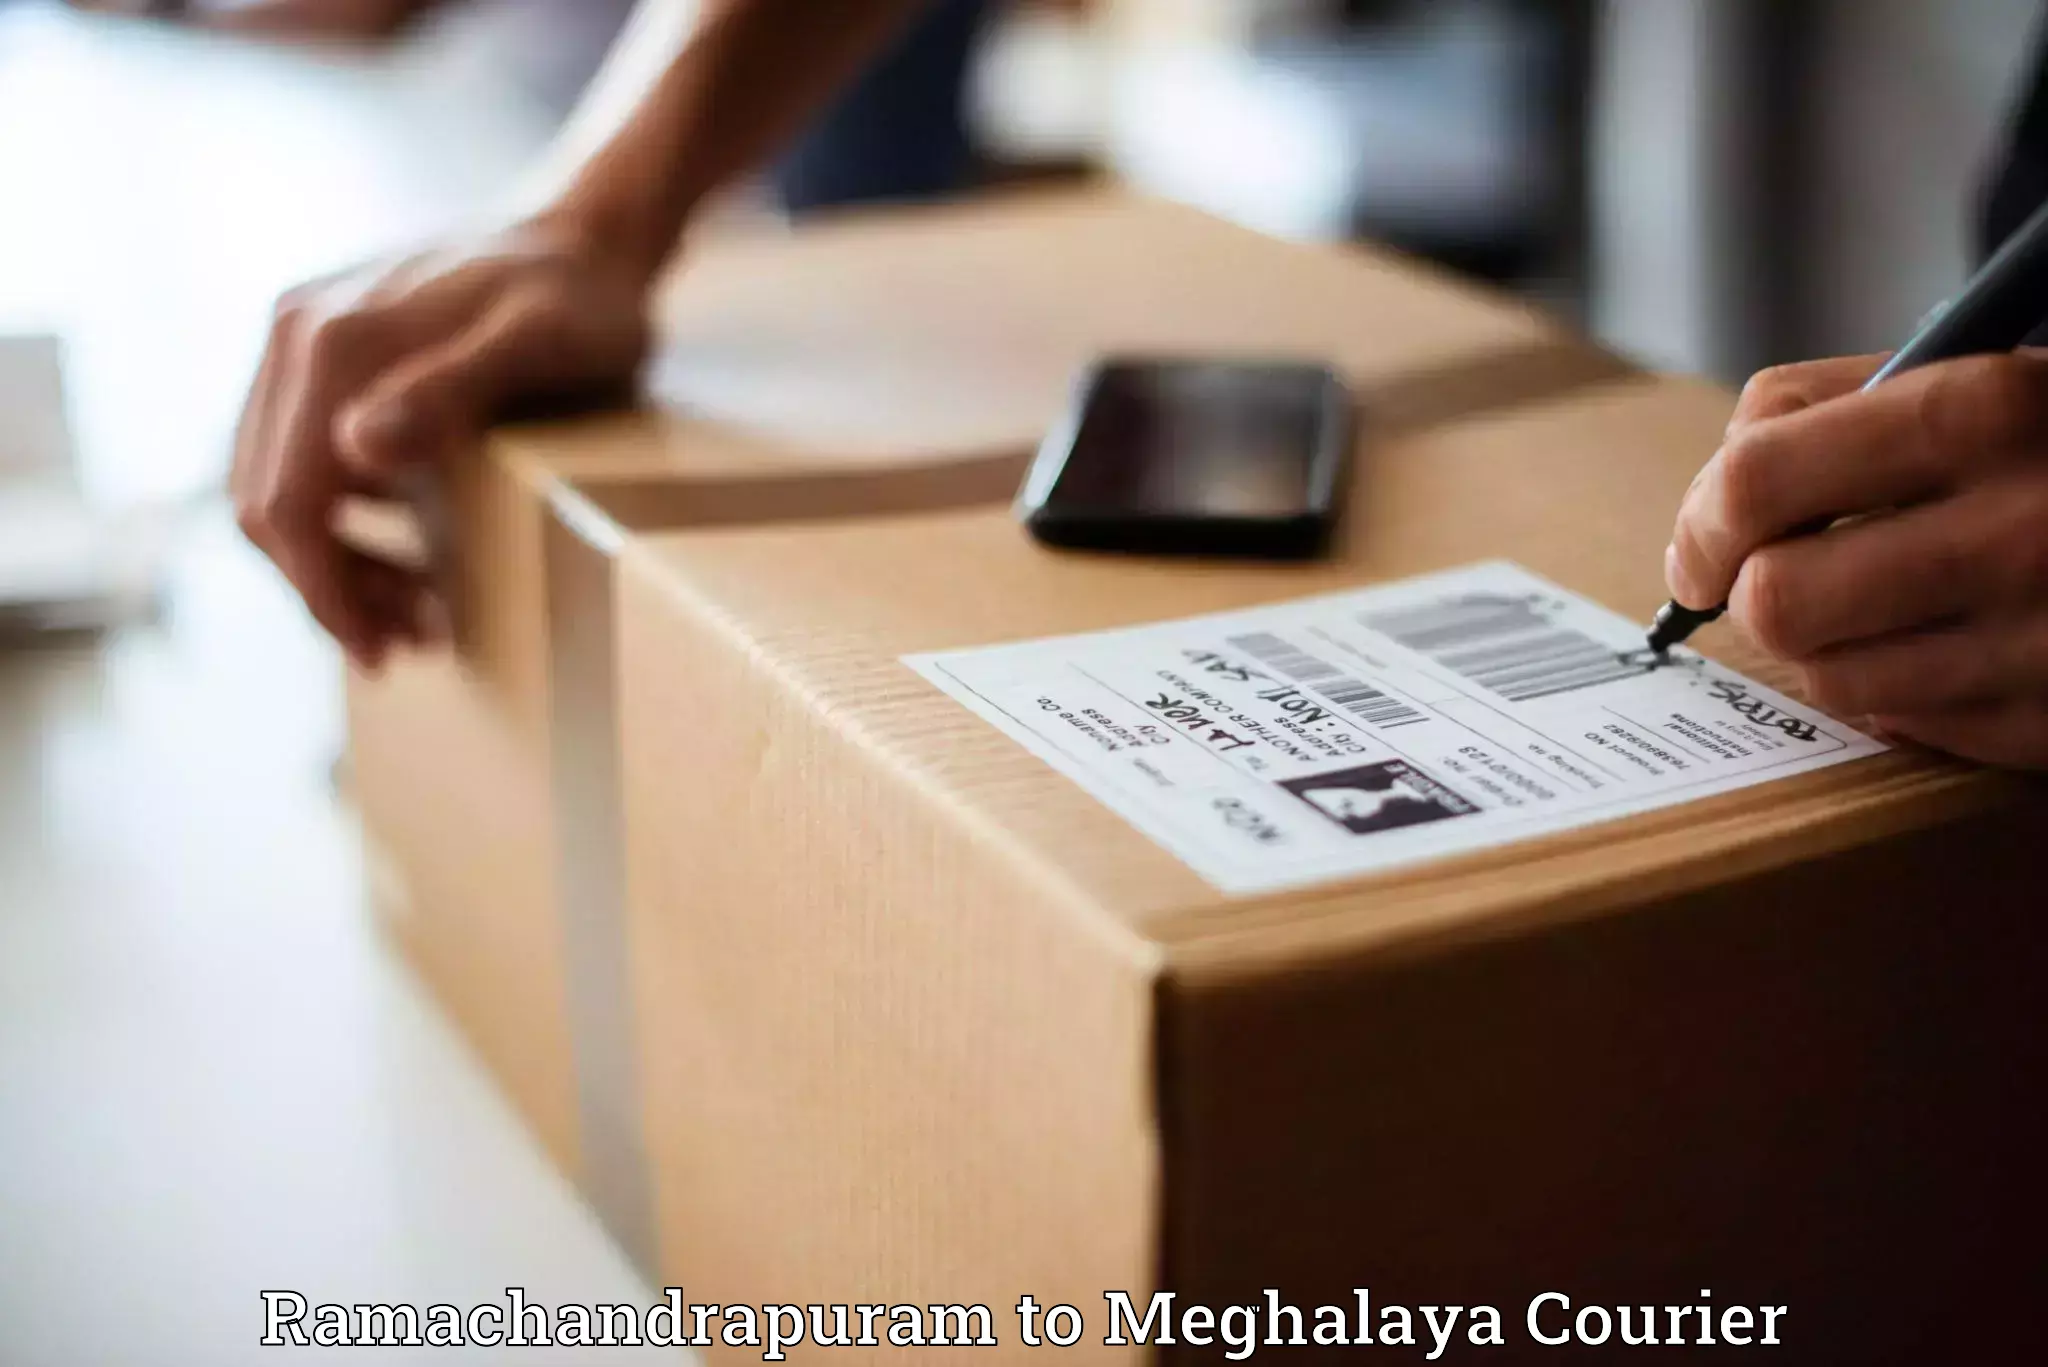 Cash on delivery service Ramachandrapuram to Shillong